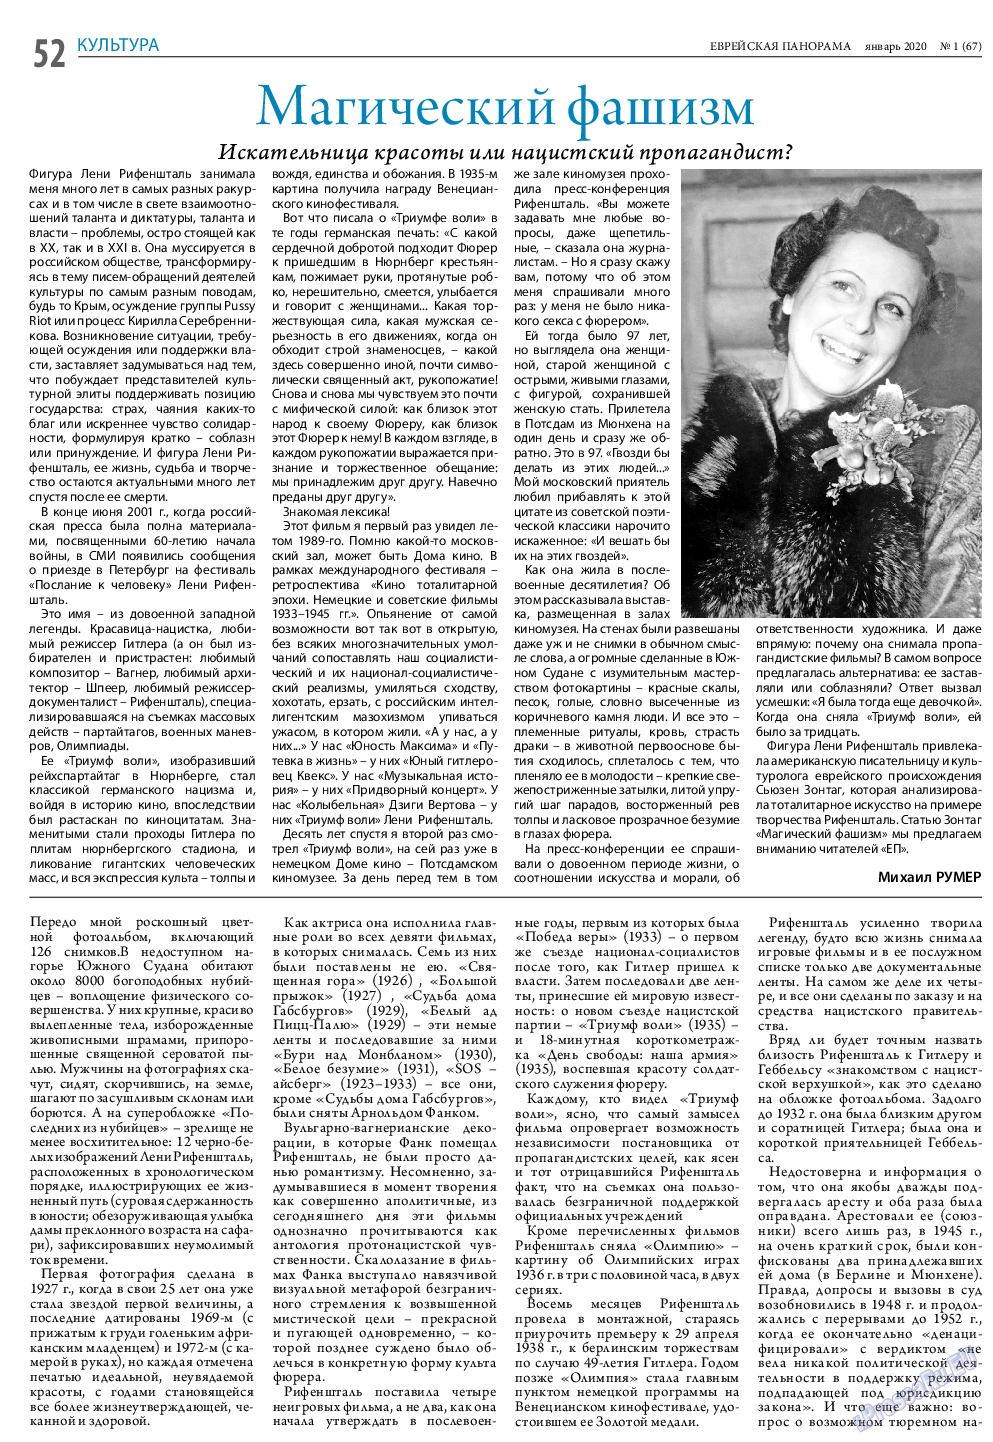 Еврейская панорама, газета. 2020 №1 стр.52